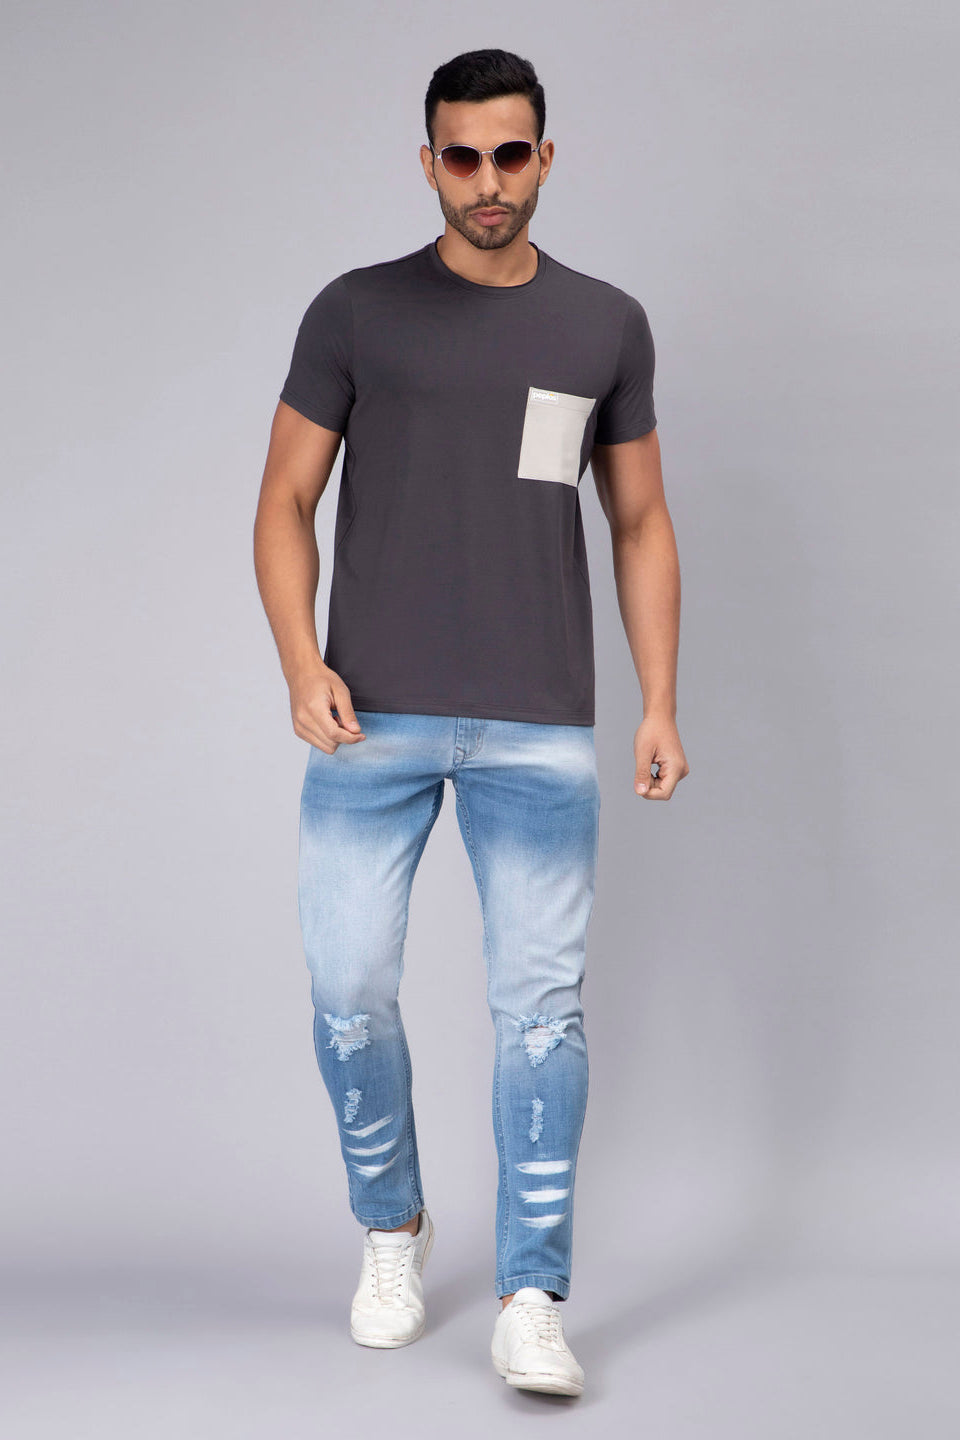 Men's Half-Sleeve Solid Cotton T-shirt with Pocket - Dark Grey